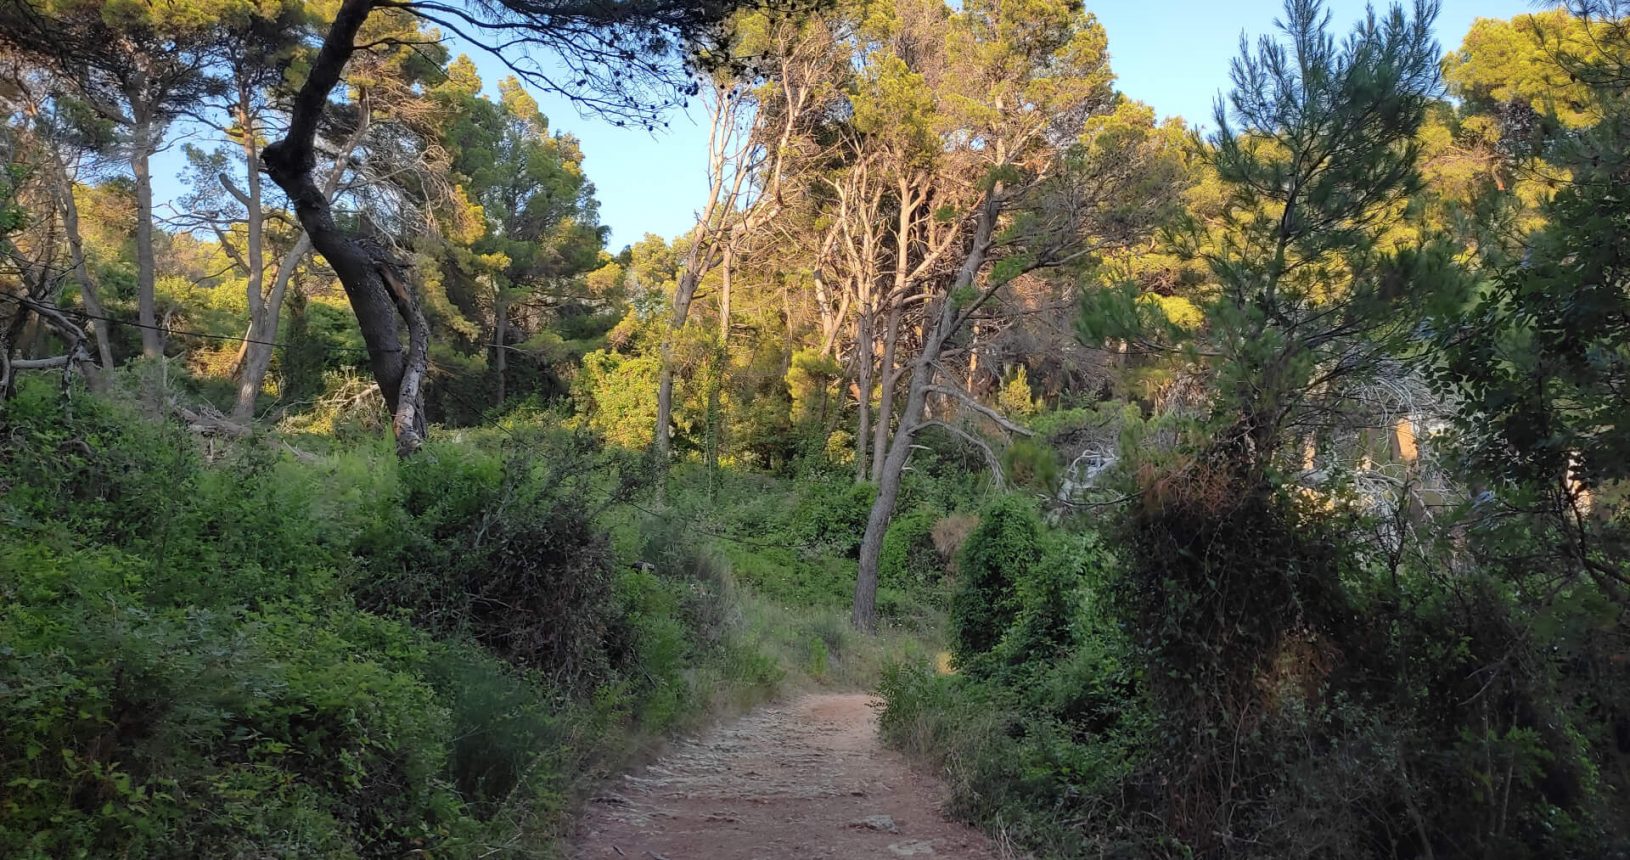 Ulcinj hiking trail in pure nature